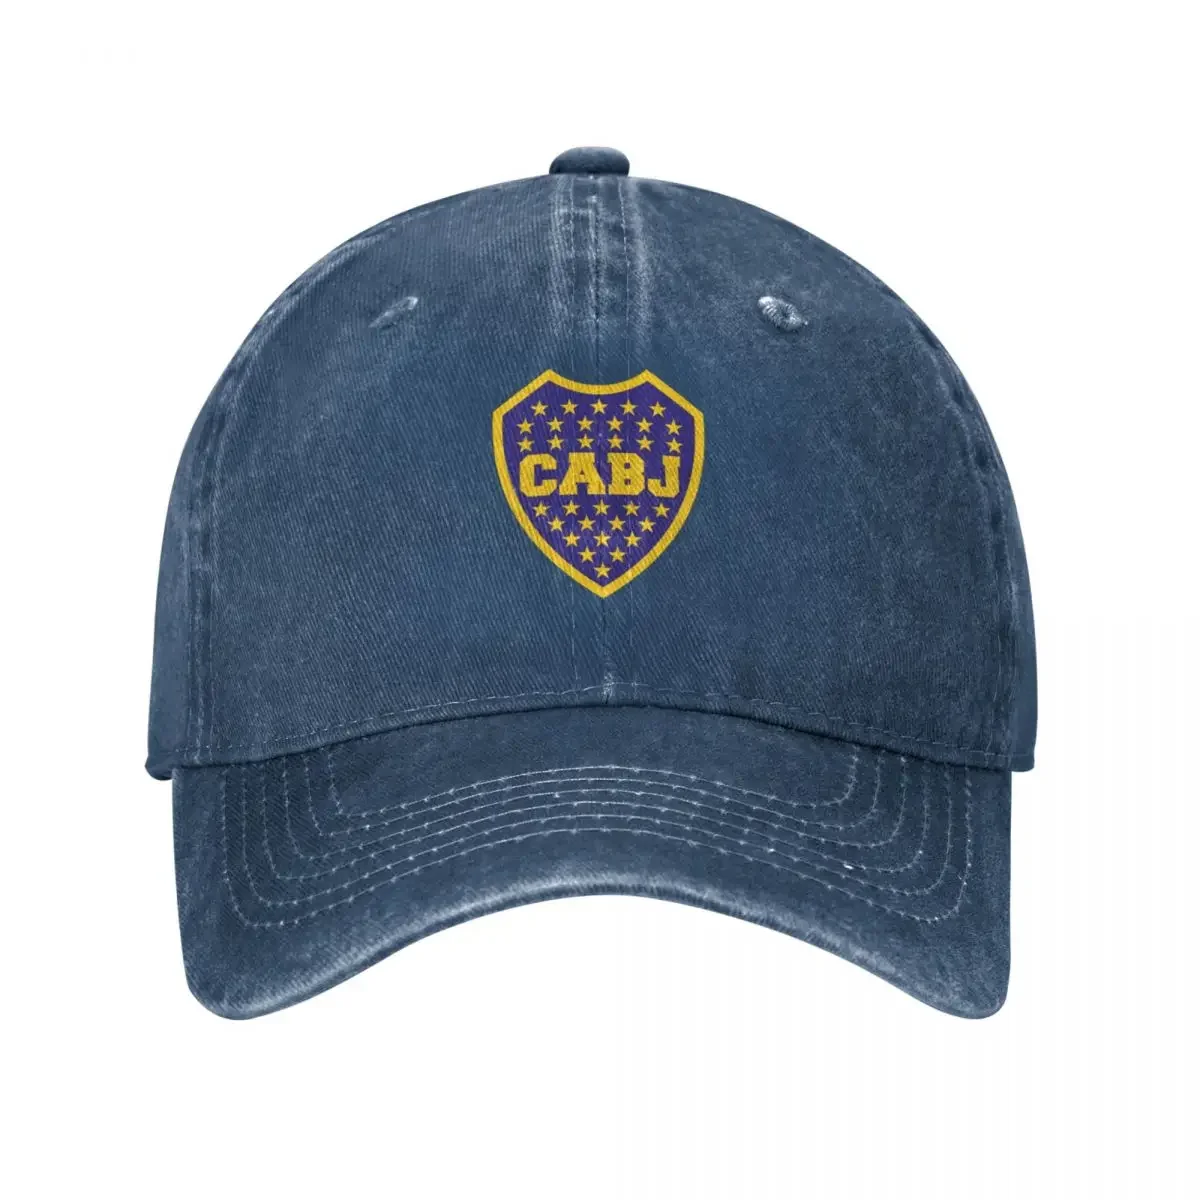 https://ae01.alicdn.com/kf/S0d9d0710a844403cbe5ade62057e4522X/Boca-Juniors-Cap-Cowboy-Hat-baseball-hat-baseball-cap-man-hats-for-men-Women-s.jpg